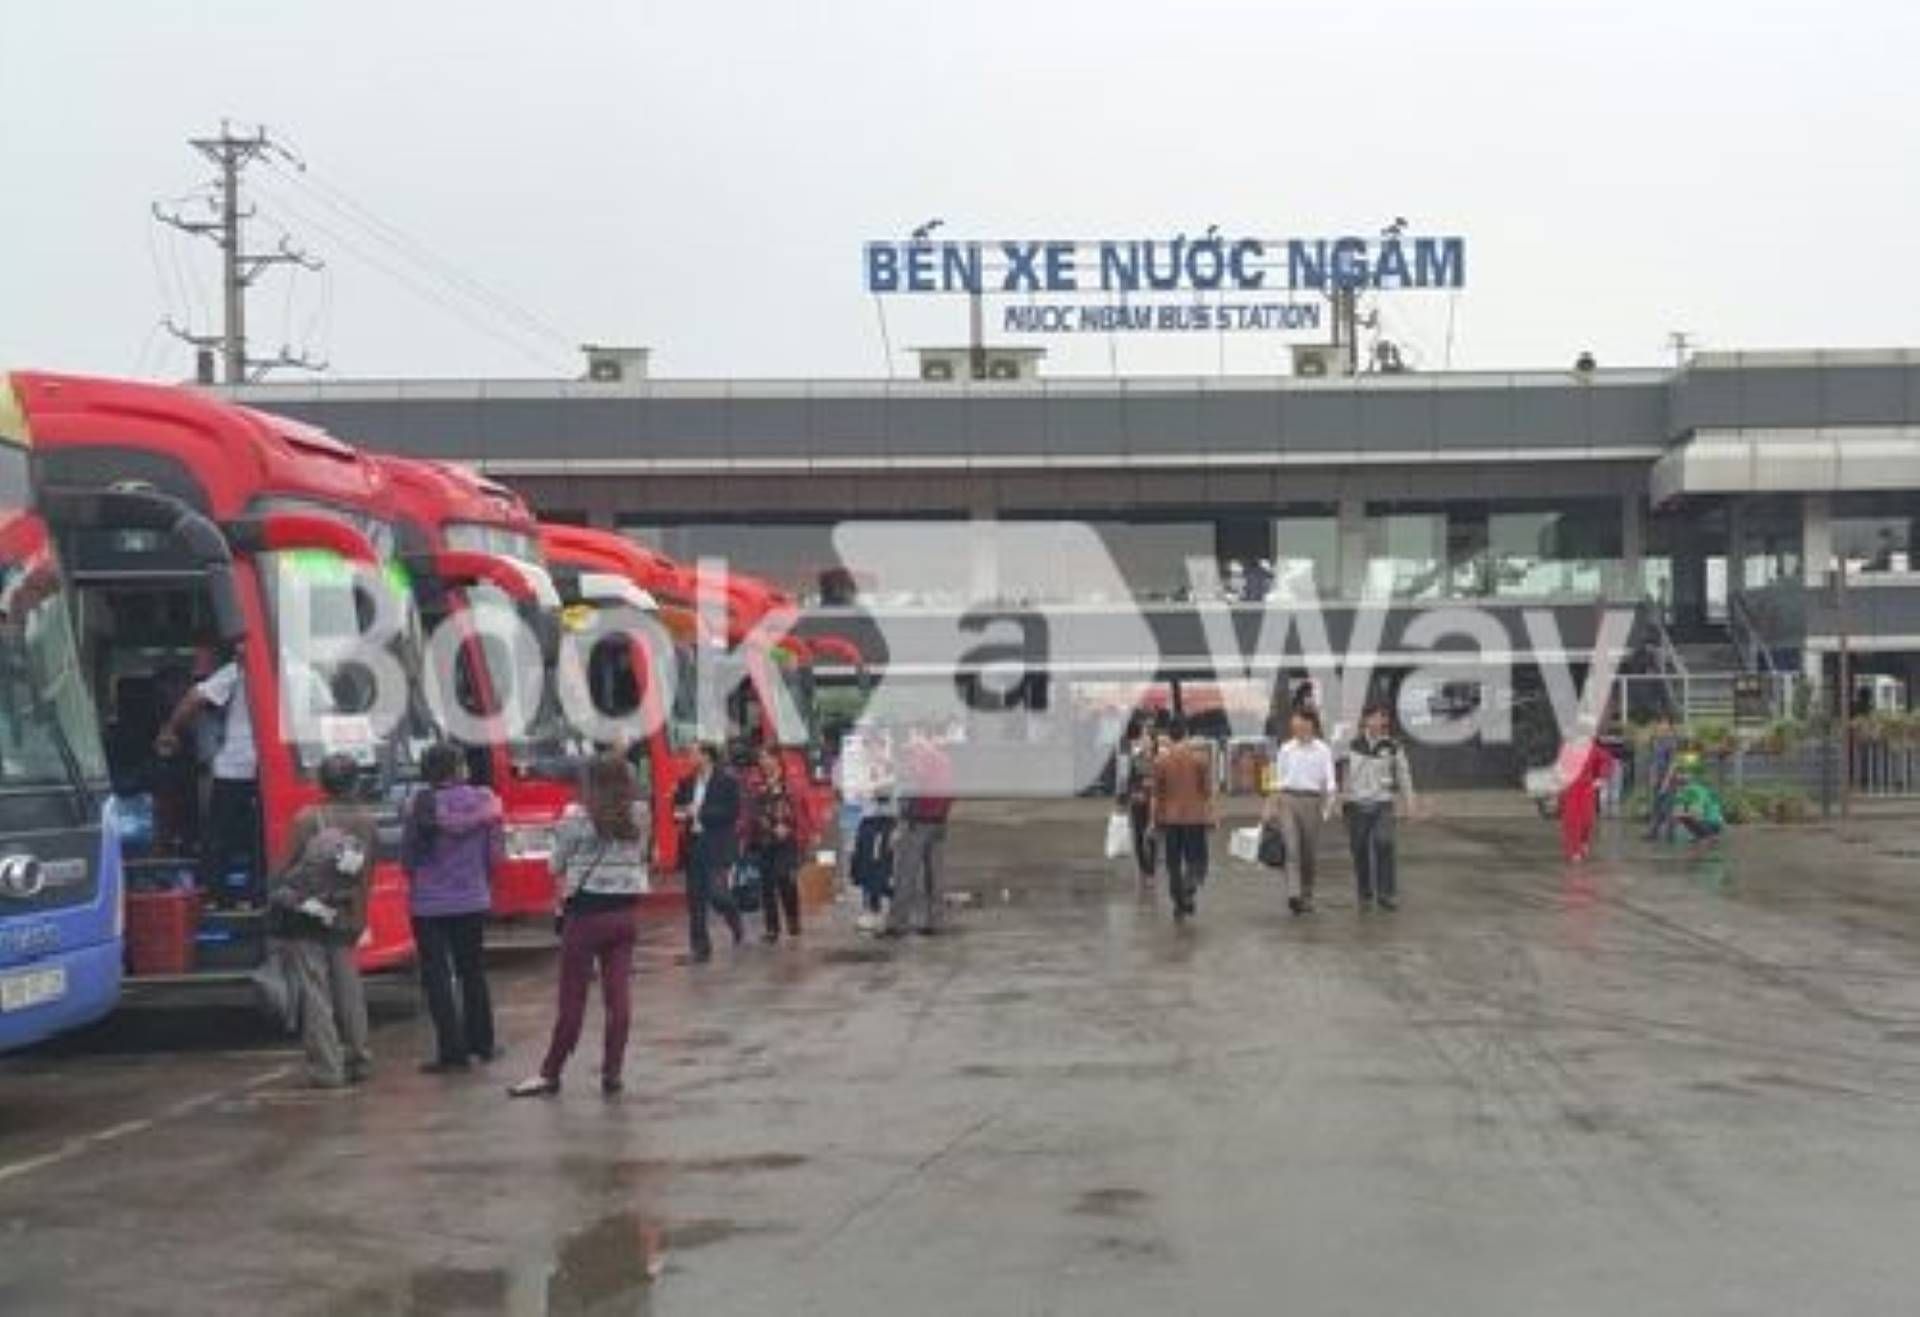 Nuoc Ngam Bus Station